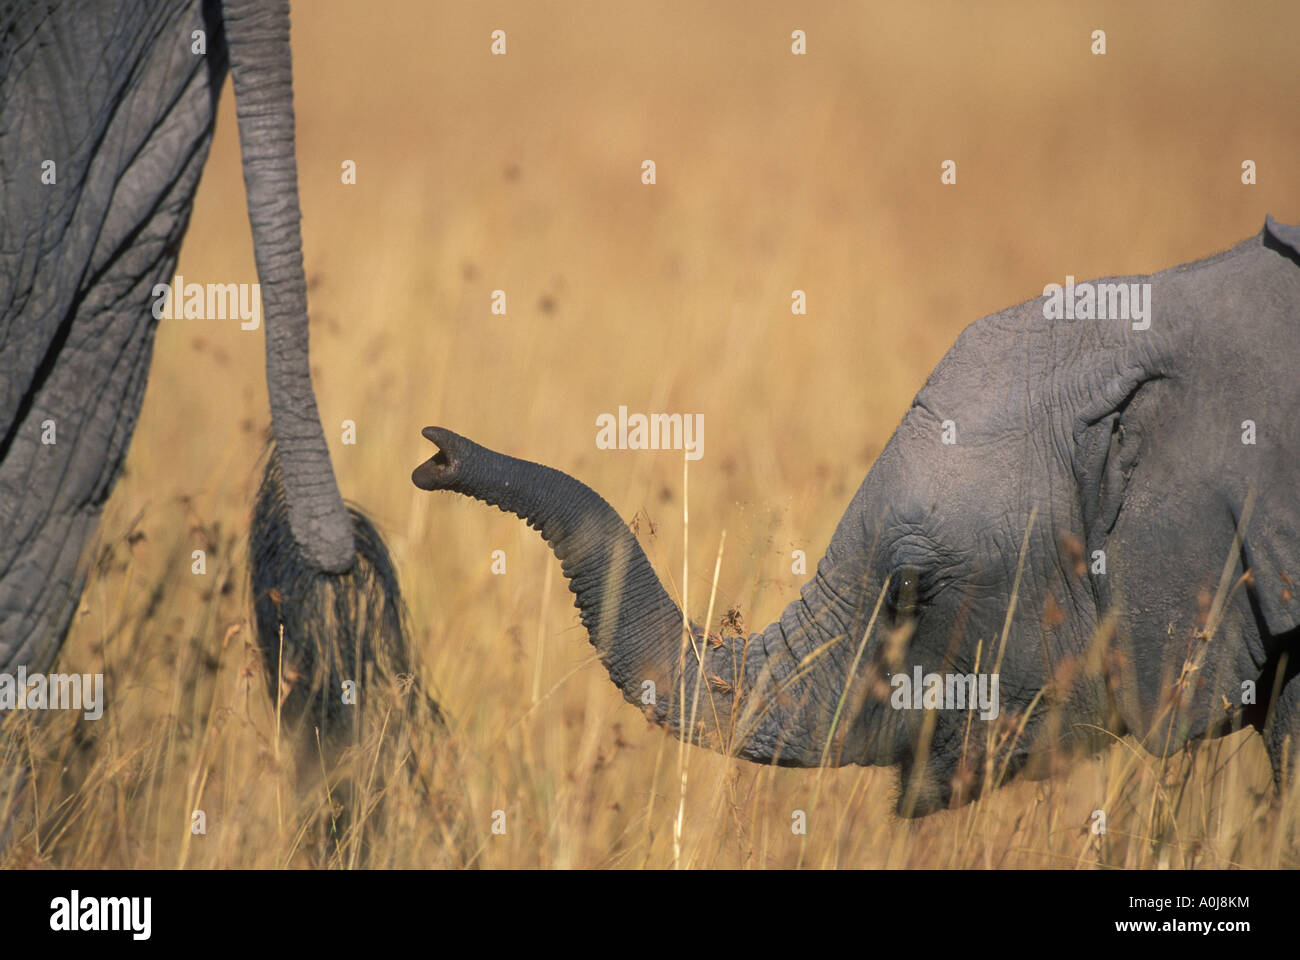 Afrika Kenia Masai Mara Game Reserve Elefant Kalb Loxodonta Africanus folgt Ende der Erwachsenen durch hohe Gräser auf Savanne Stockfoto